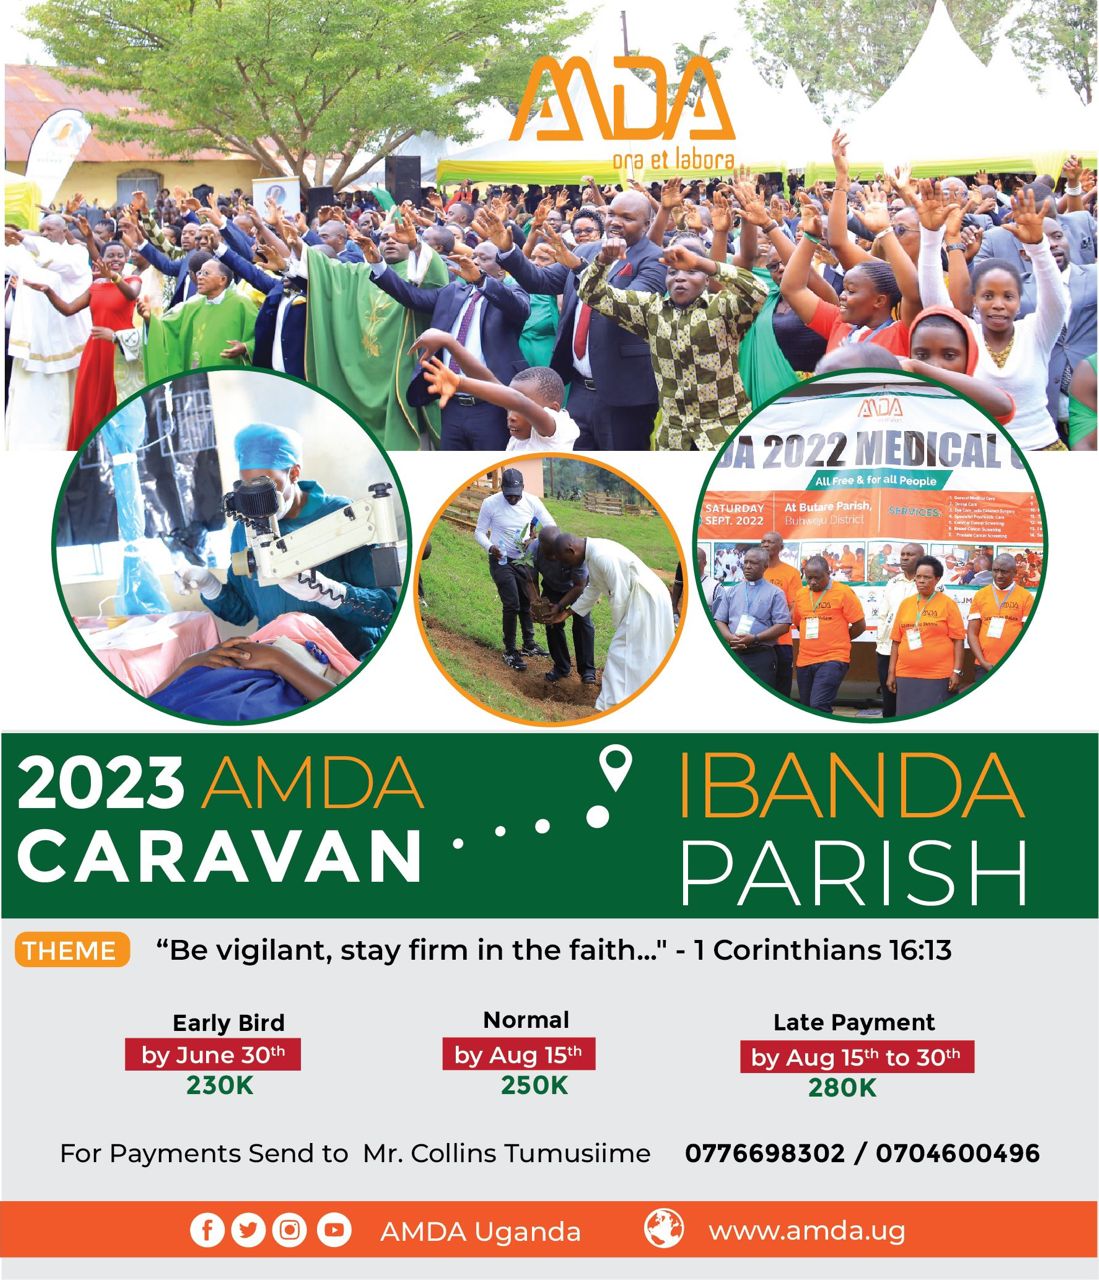 AMDA CARAVAN 2023 IN IBANDA